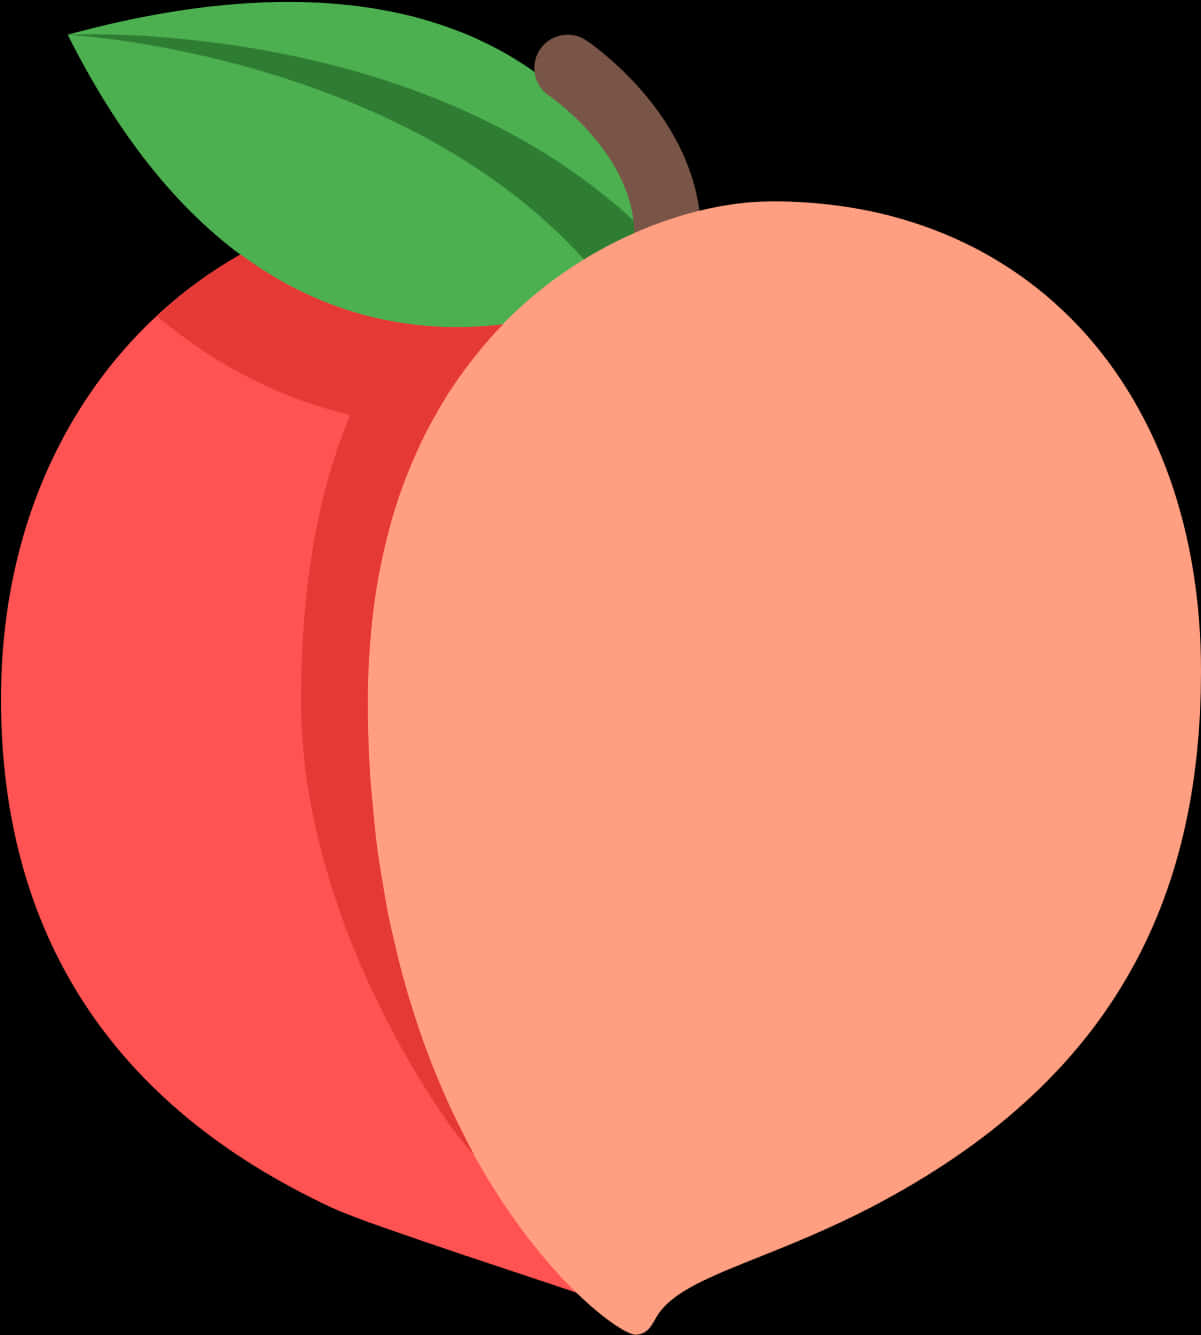 A Peach With A Leaf